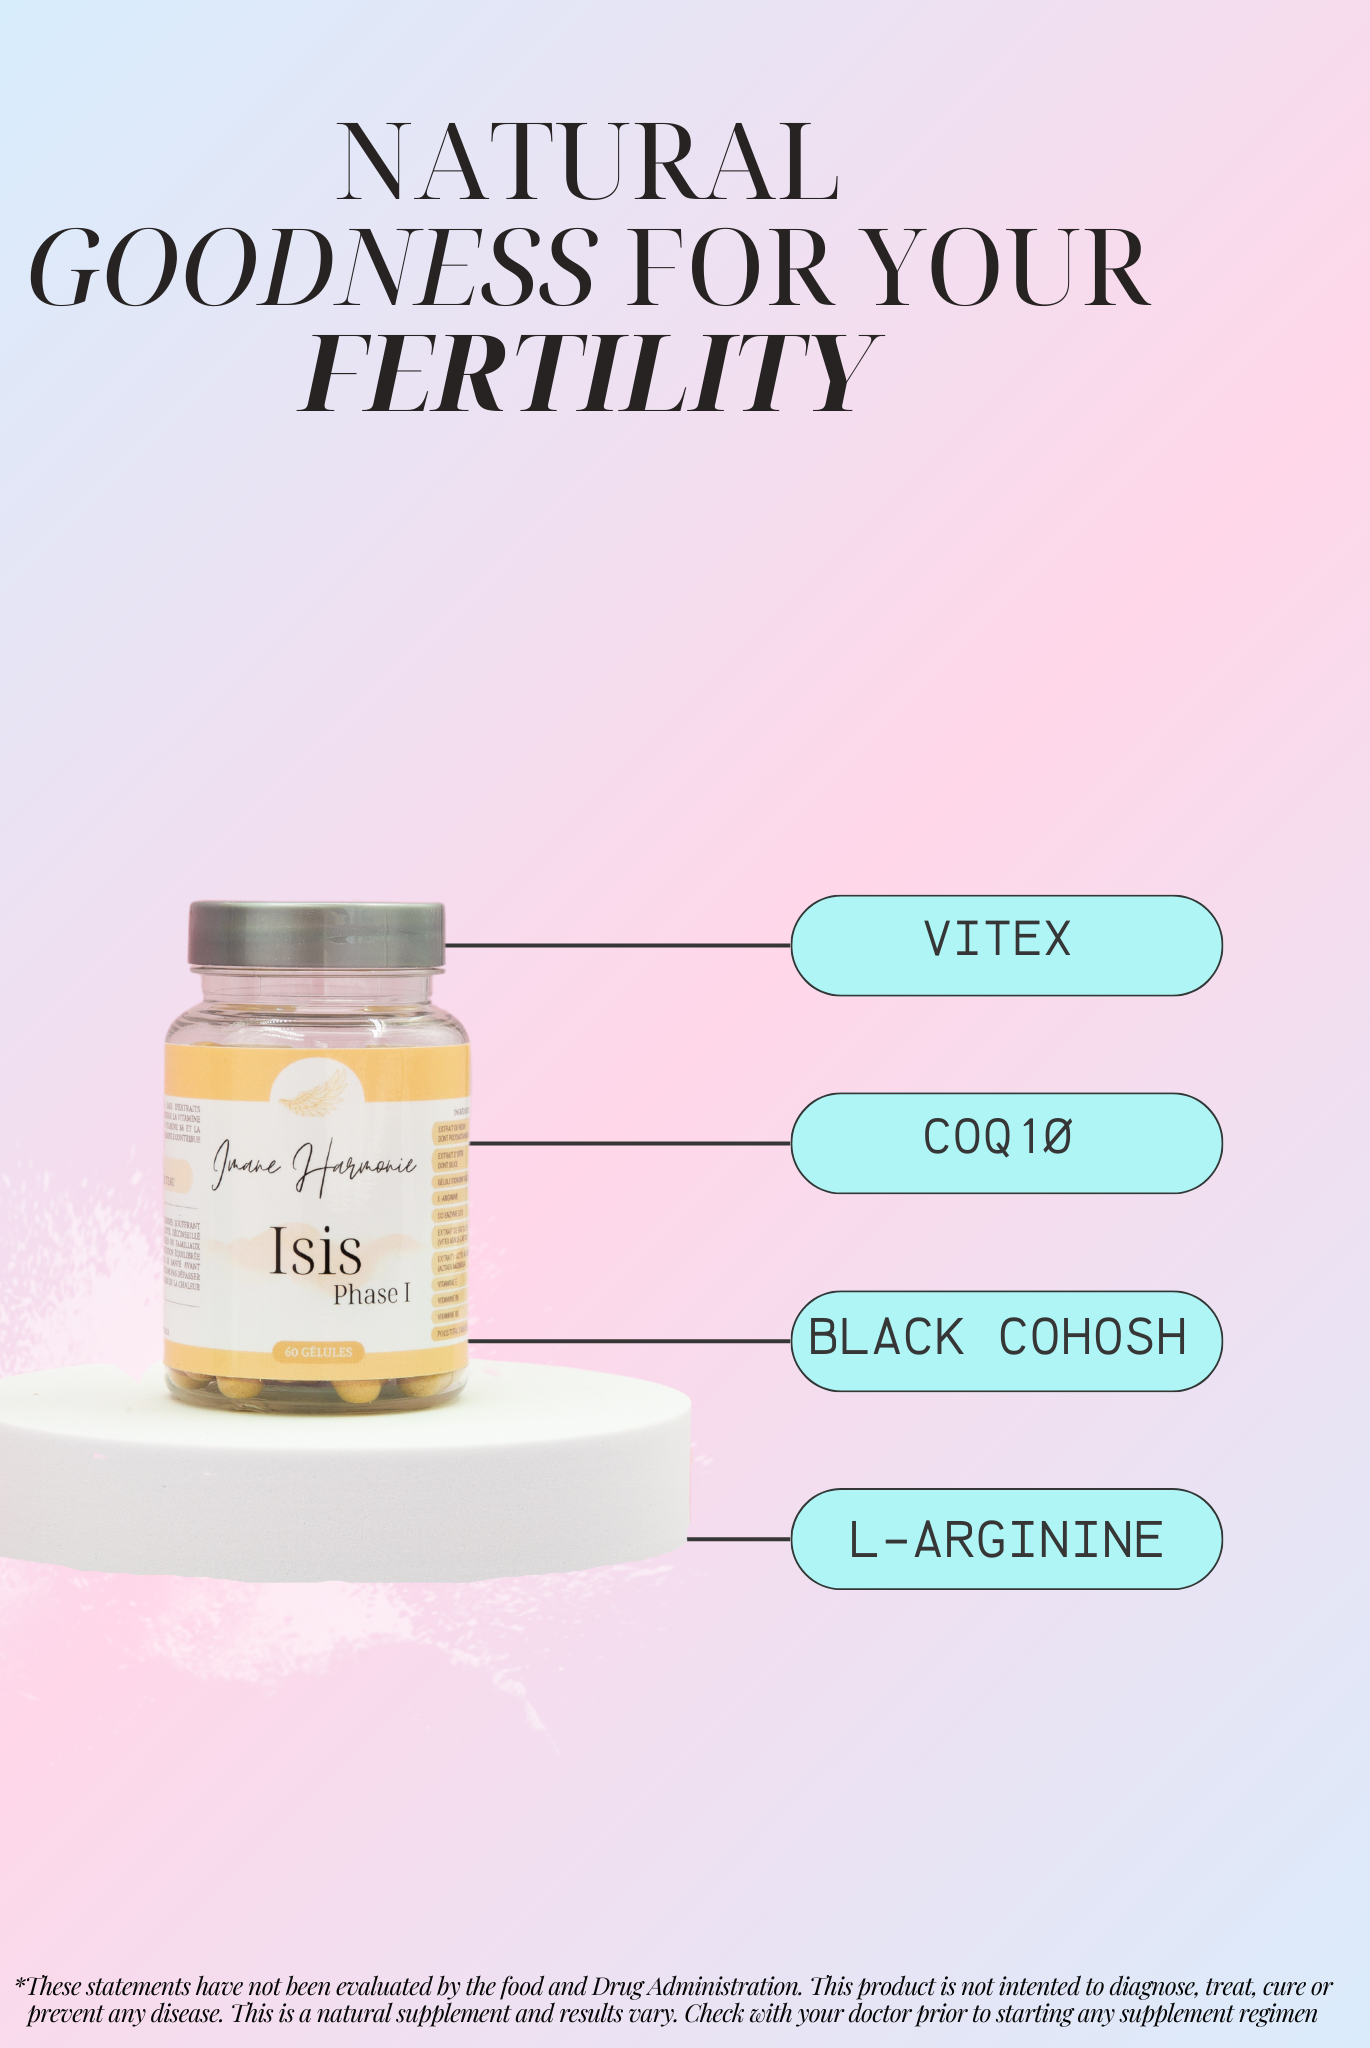 Primary supplements of Isis phase 1 : Vitex, coq10, black cohosh, l-arginine